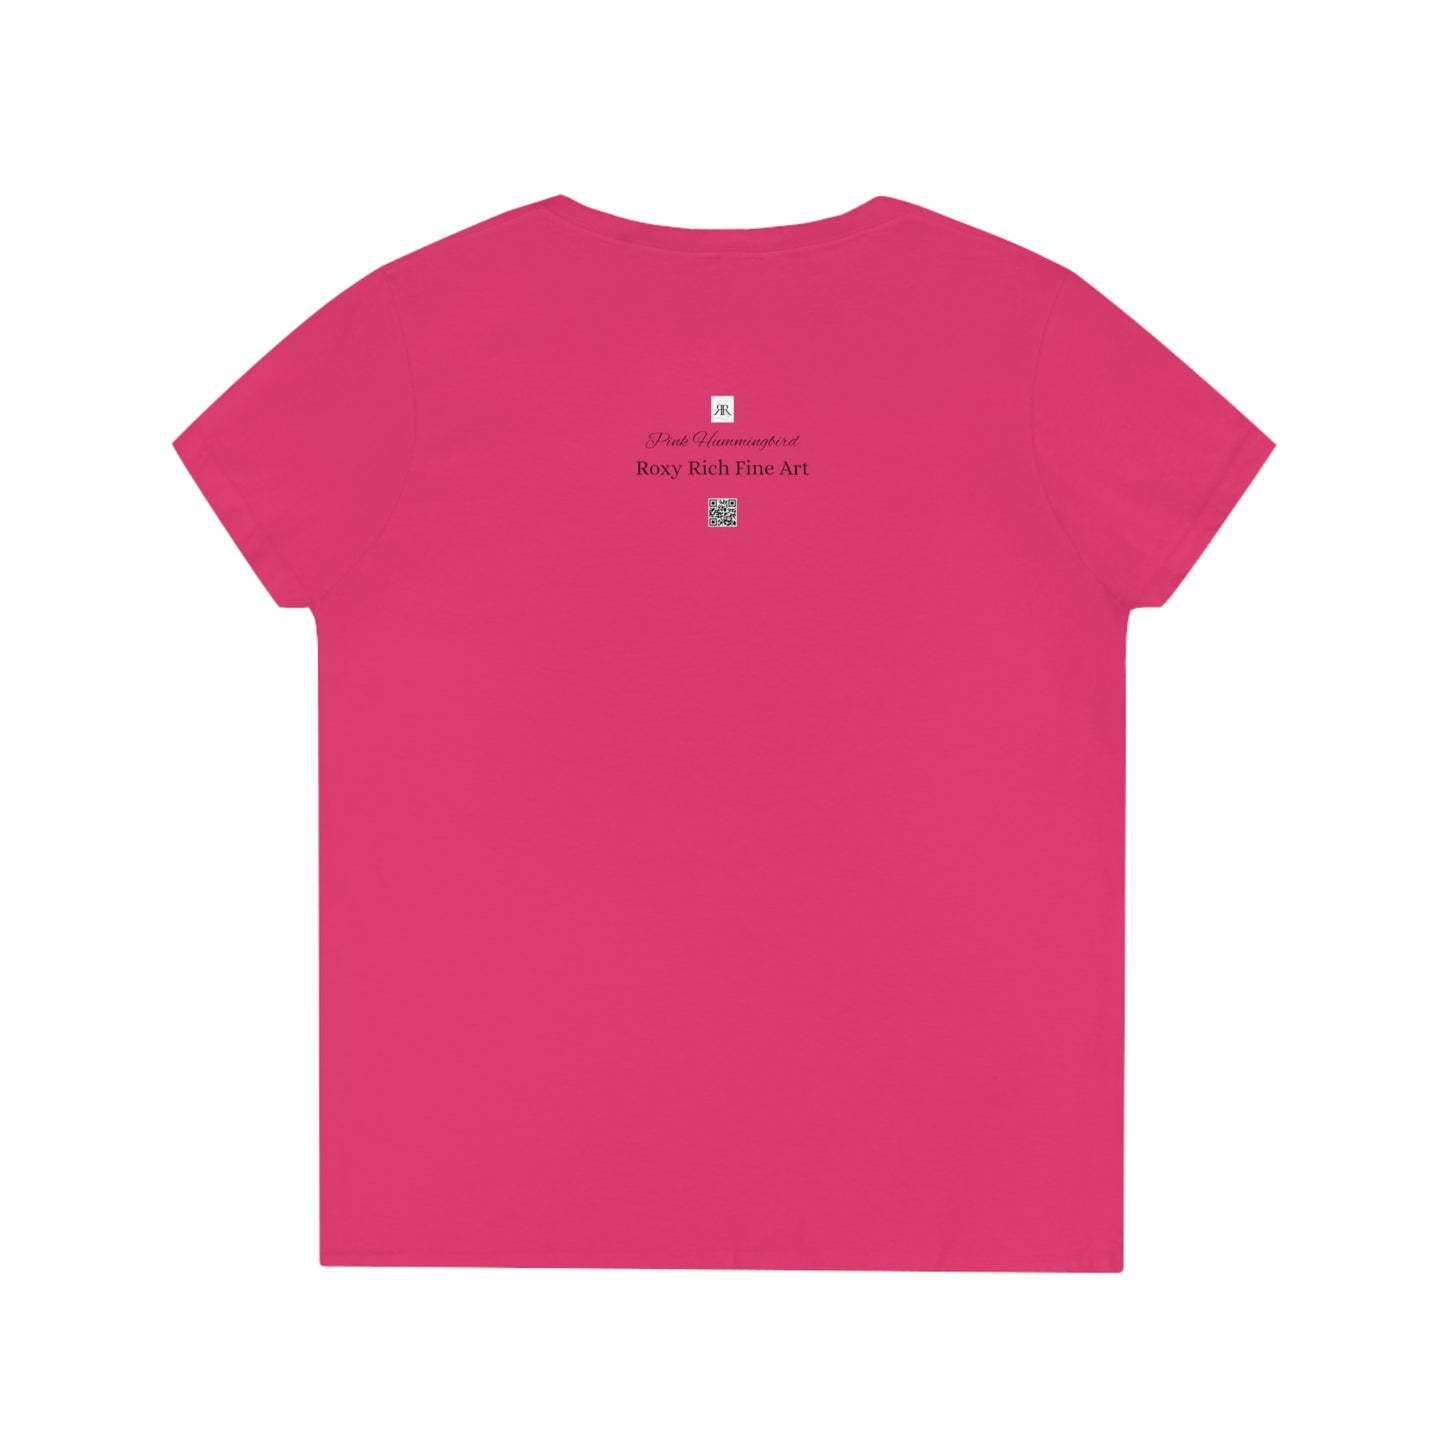 Pink Hummingbird Ladies' V-Neck T-Shirt